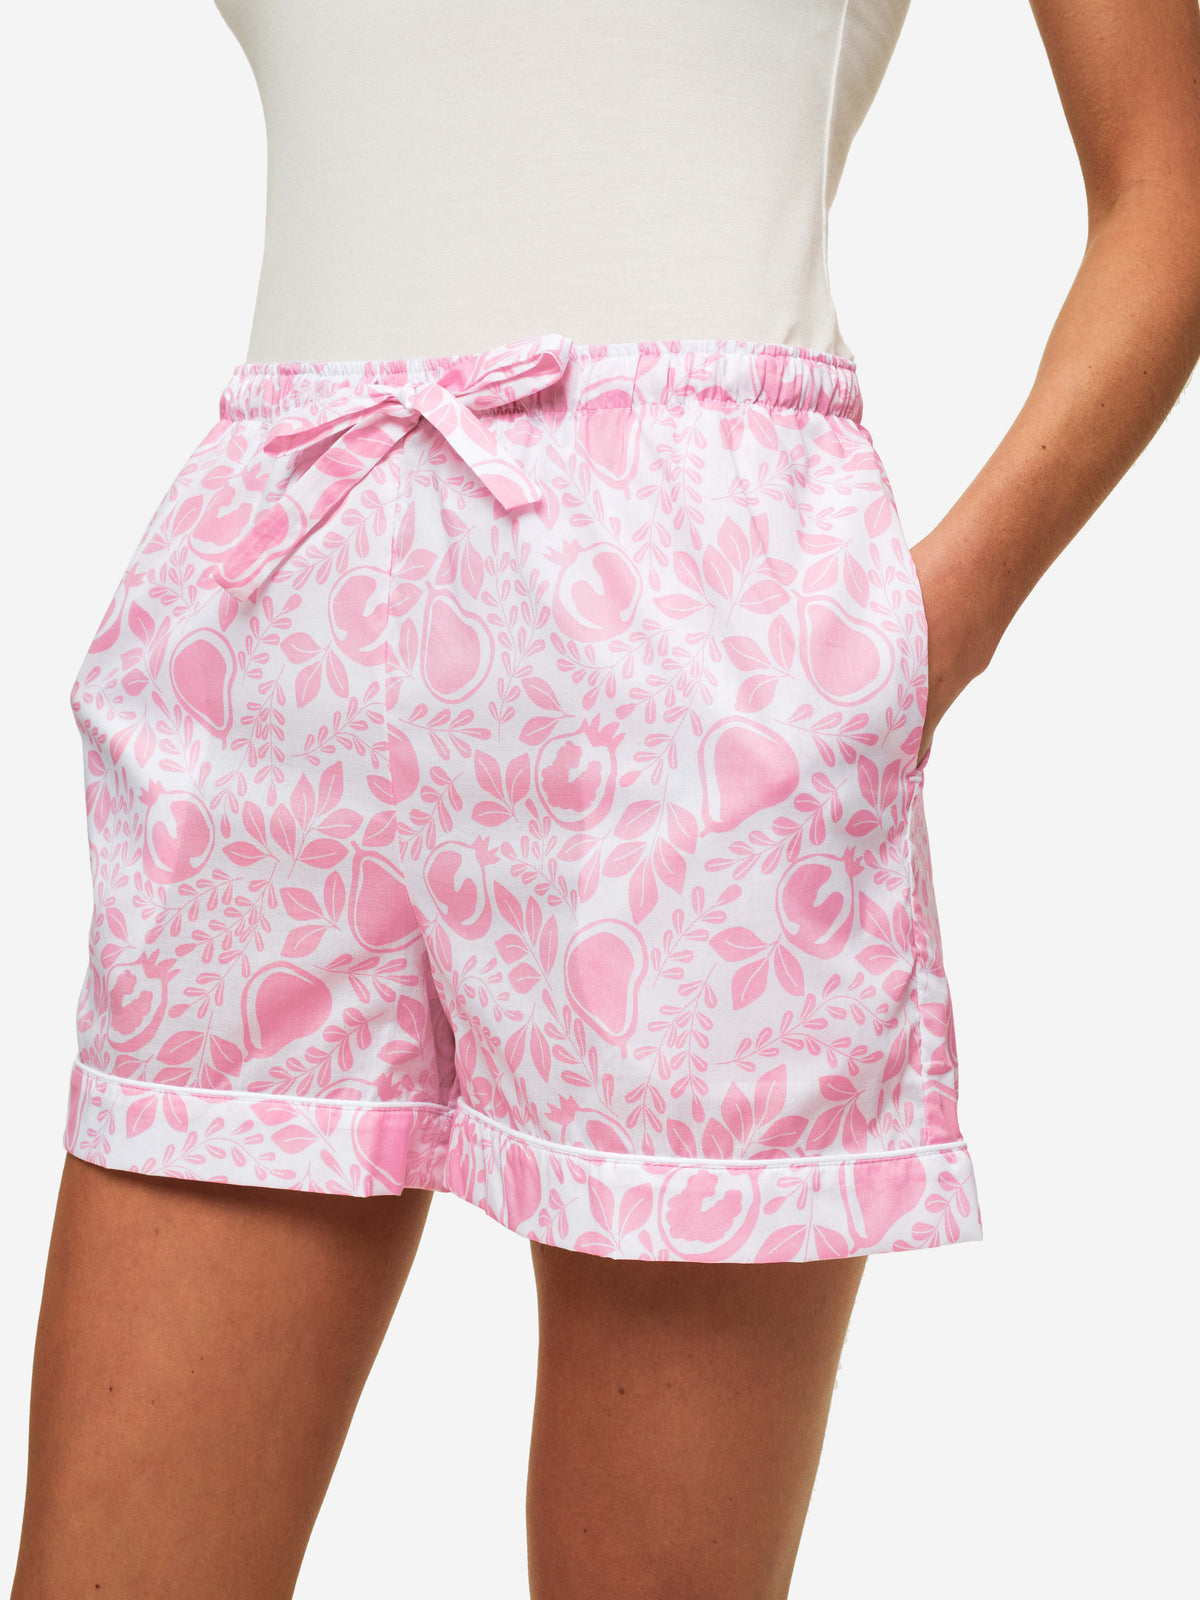 Women's Lounge Shorts Nelson 89 Cotton Batiste Pink